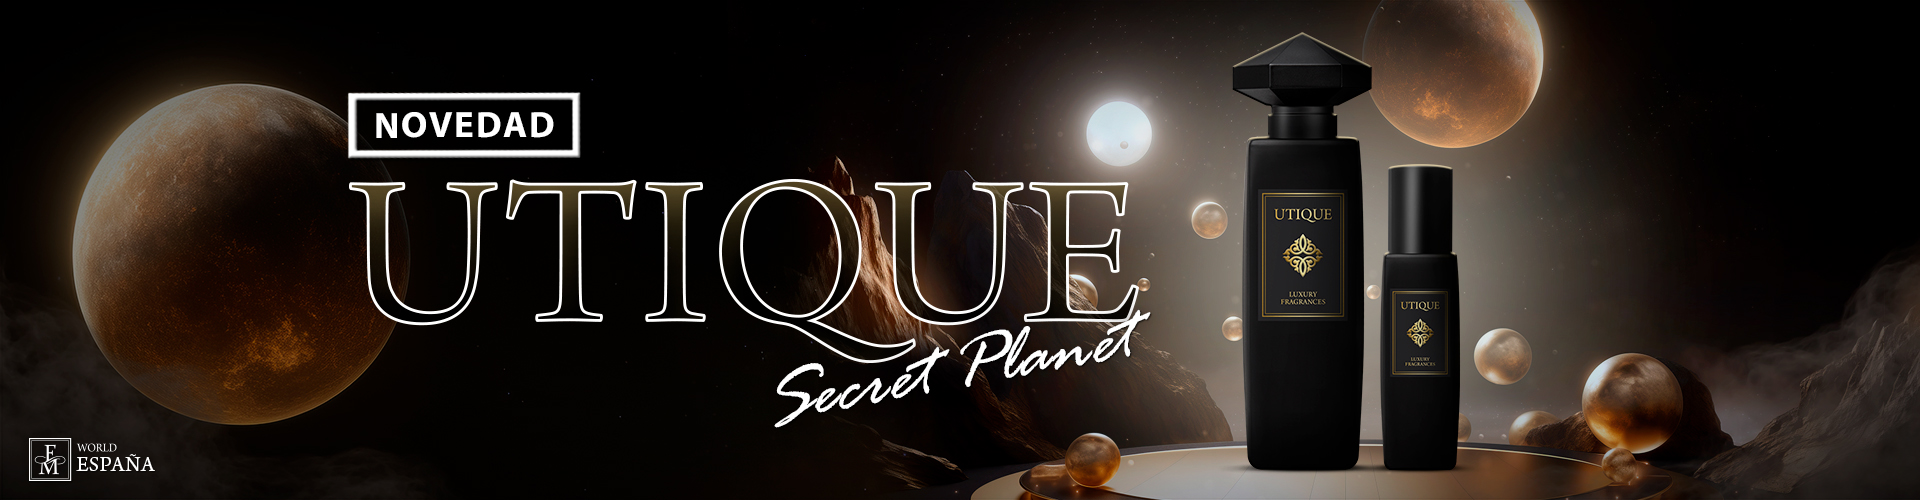 Utiique secret Planet